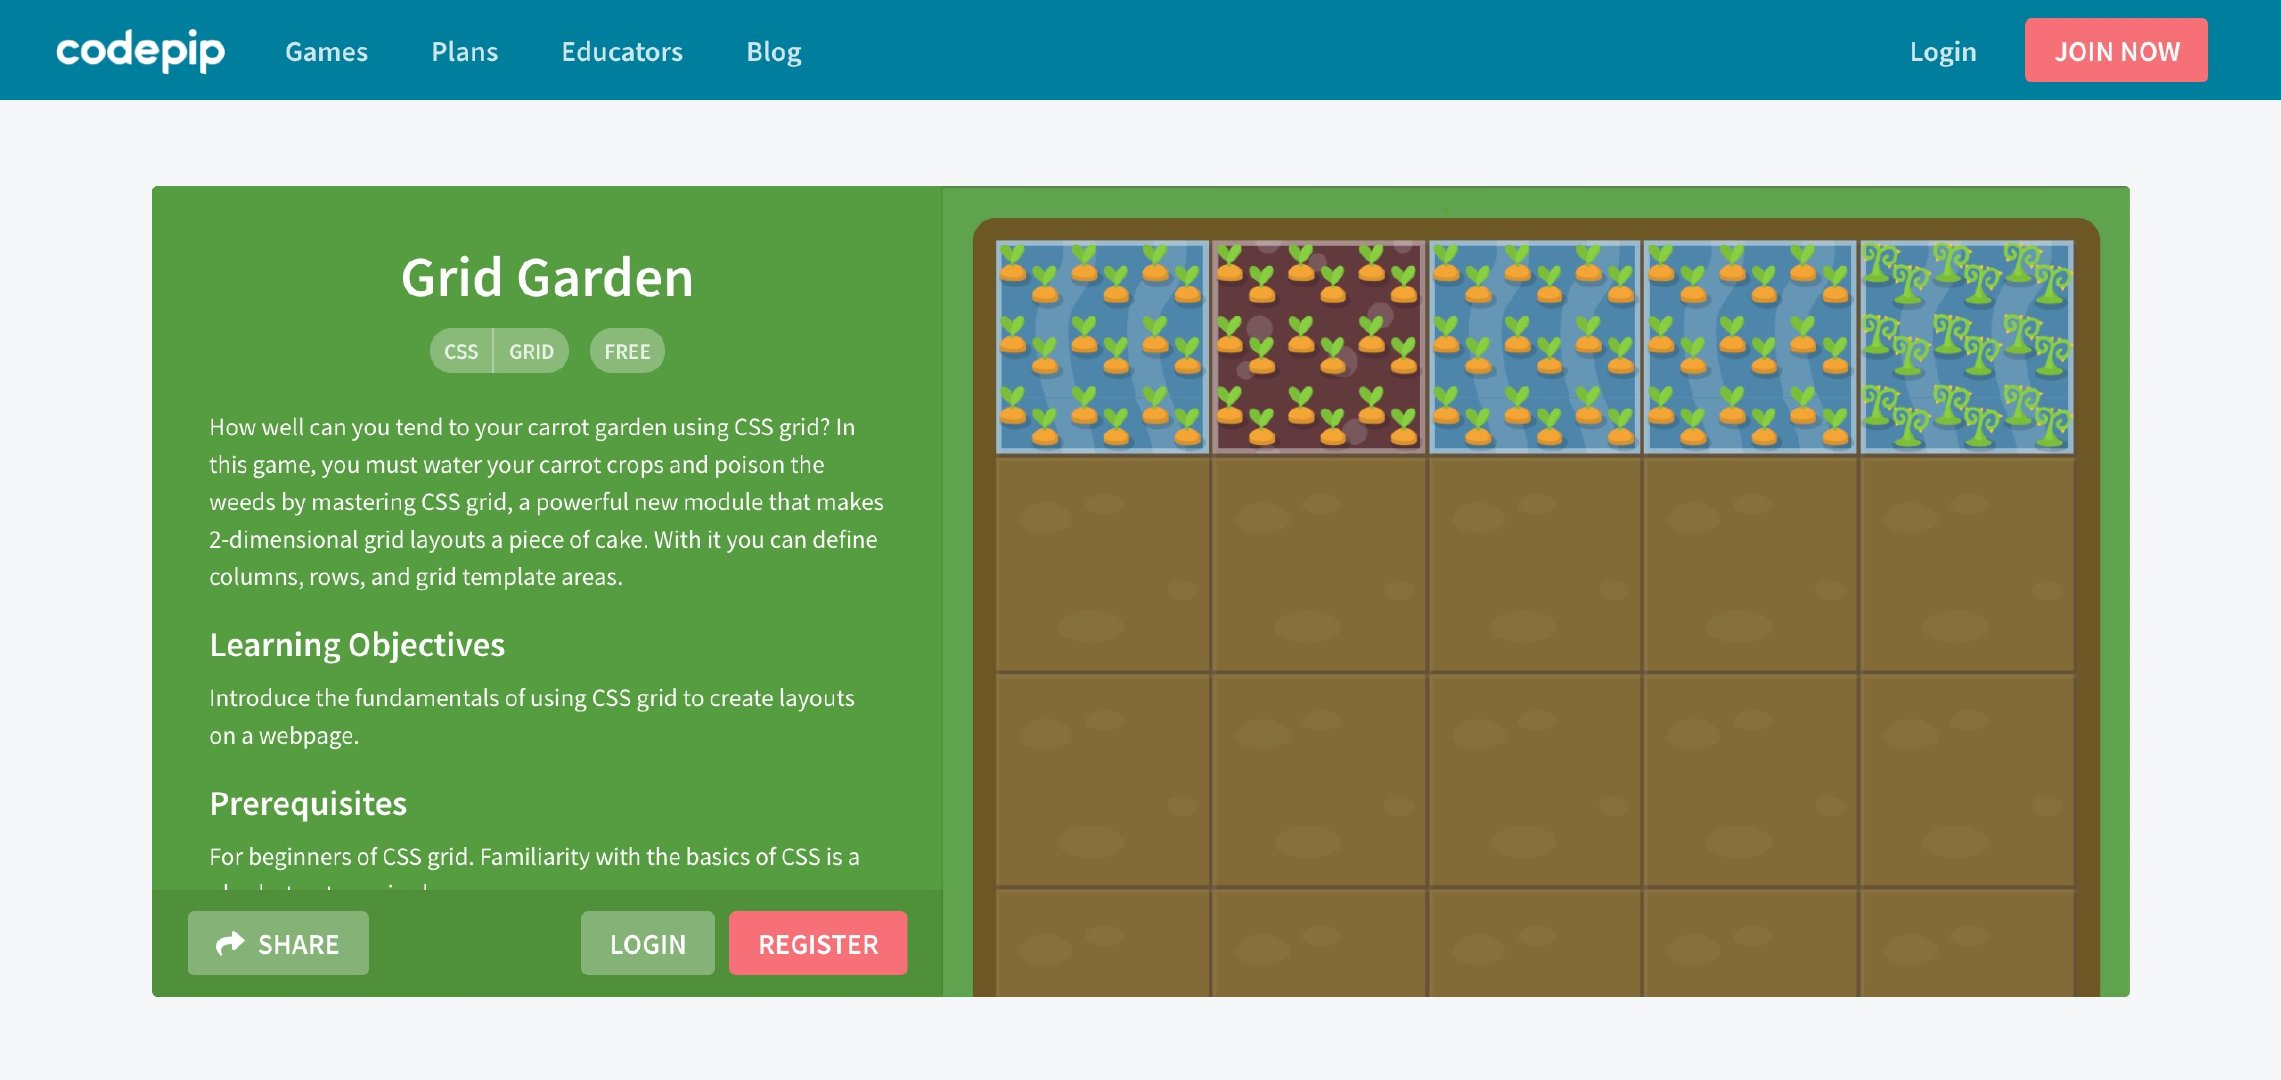 codepip.com_games_grid-garden